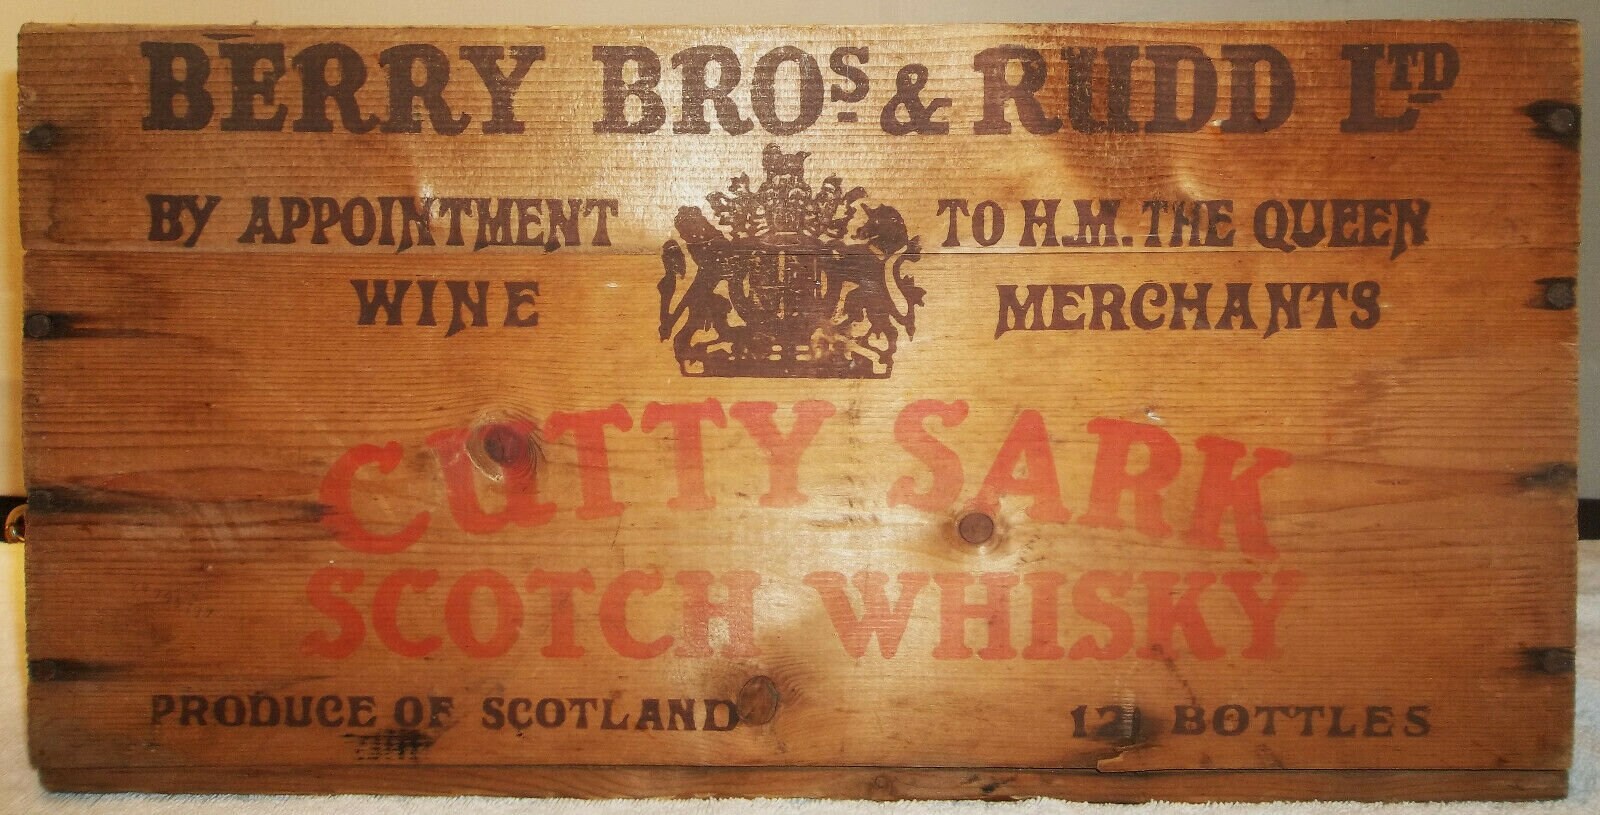 Vintage Berry Bros & Rudd Ltd Cutty Sark Scotch Whisky Wood Crate